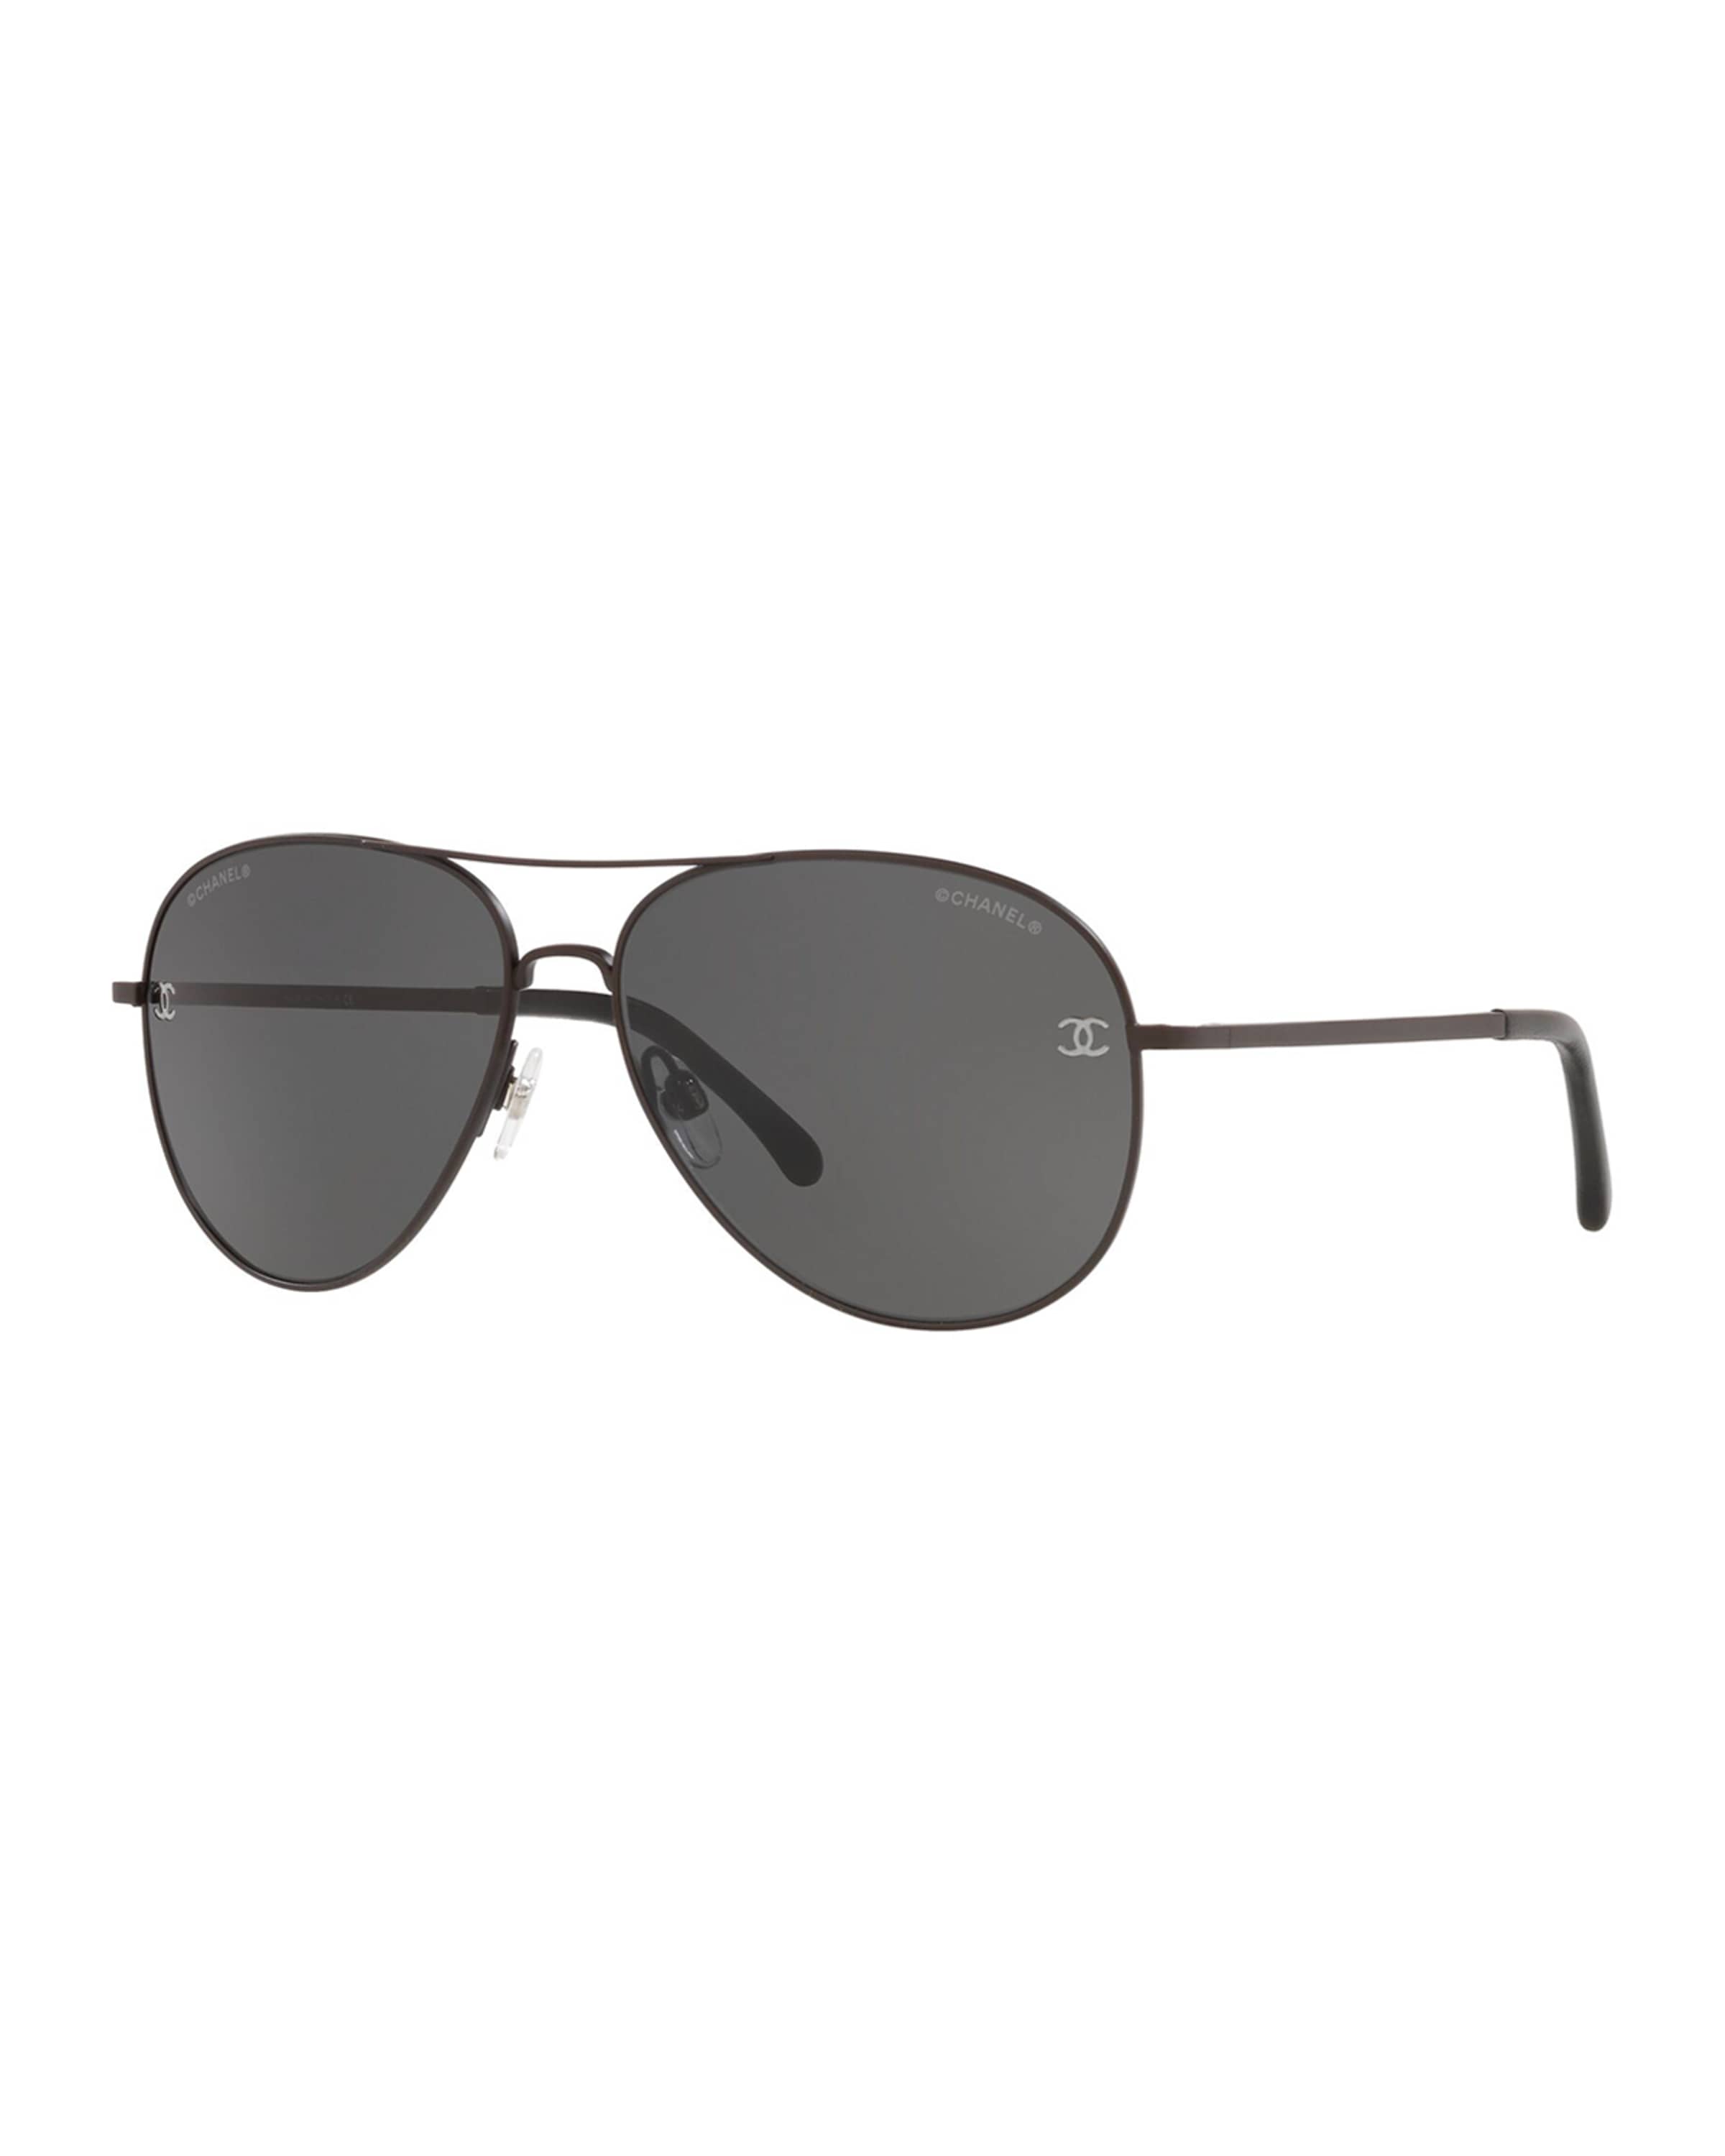 CHANEL Metal Aviator Sunglasses with Gradient Lenses | Neiman Marcus